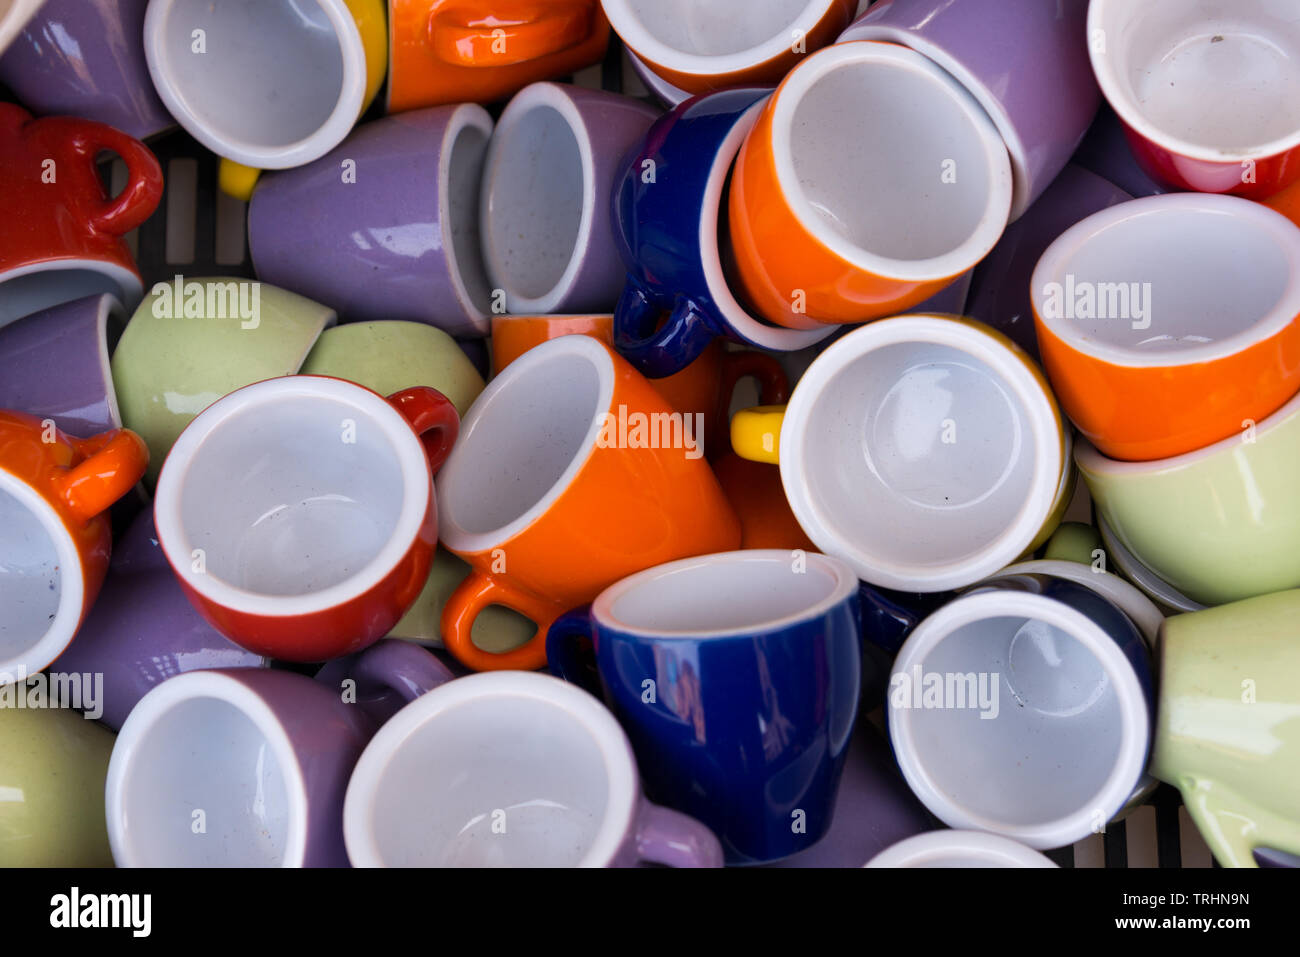 https://c8.alamy.com/comp/TRHN9N/colorful-espresso-cups-in-rome-italy-TRHN9N.jpg